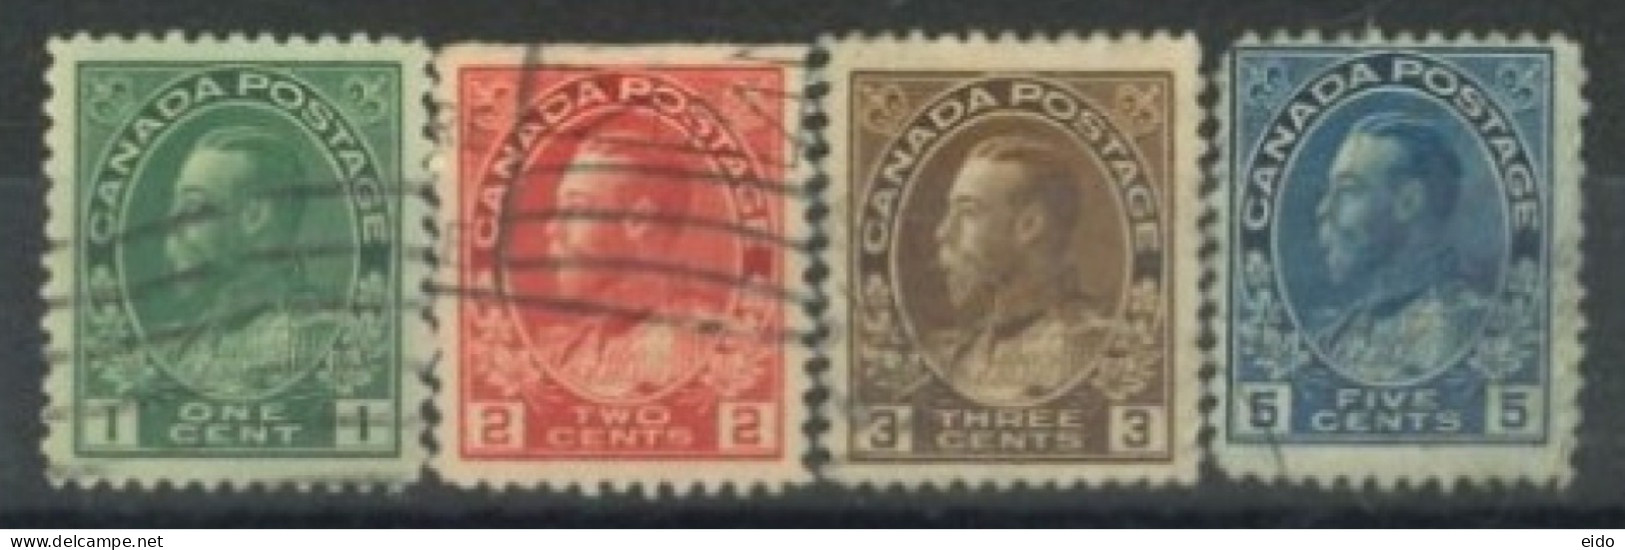 CANADA - 1912, KING GEORGE V STAMPS SET OF 4, USED. - Gebruikt